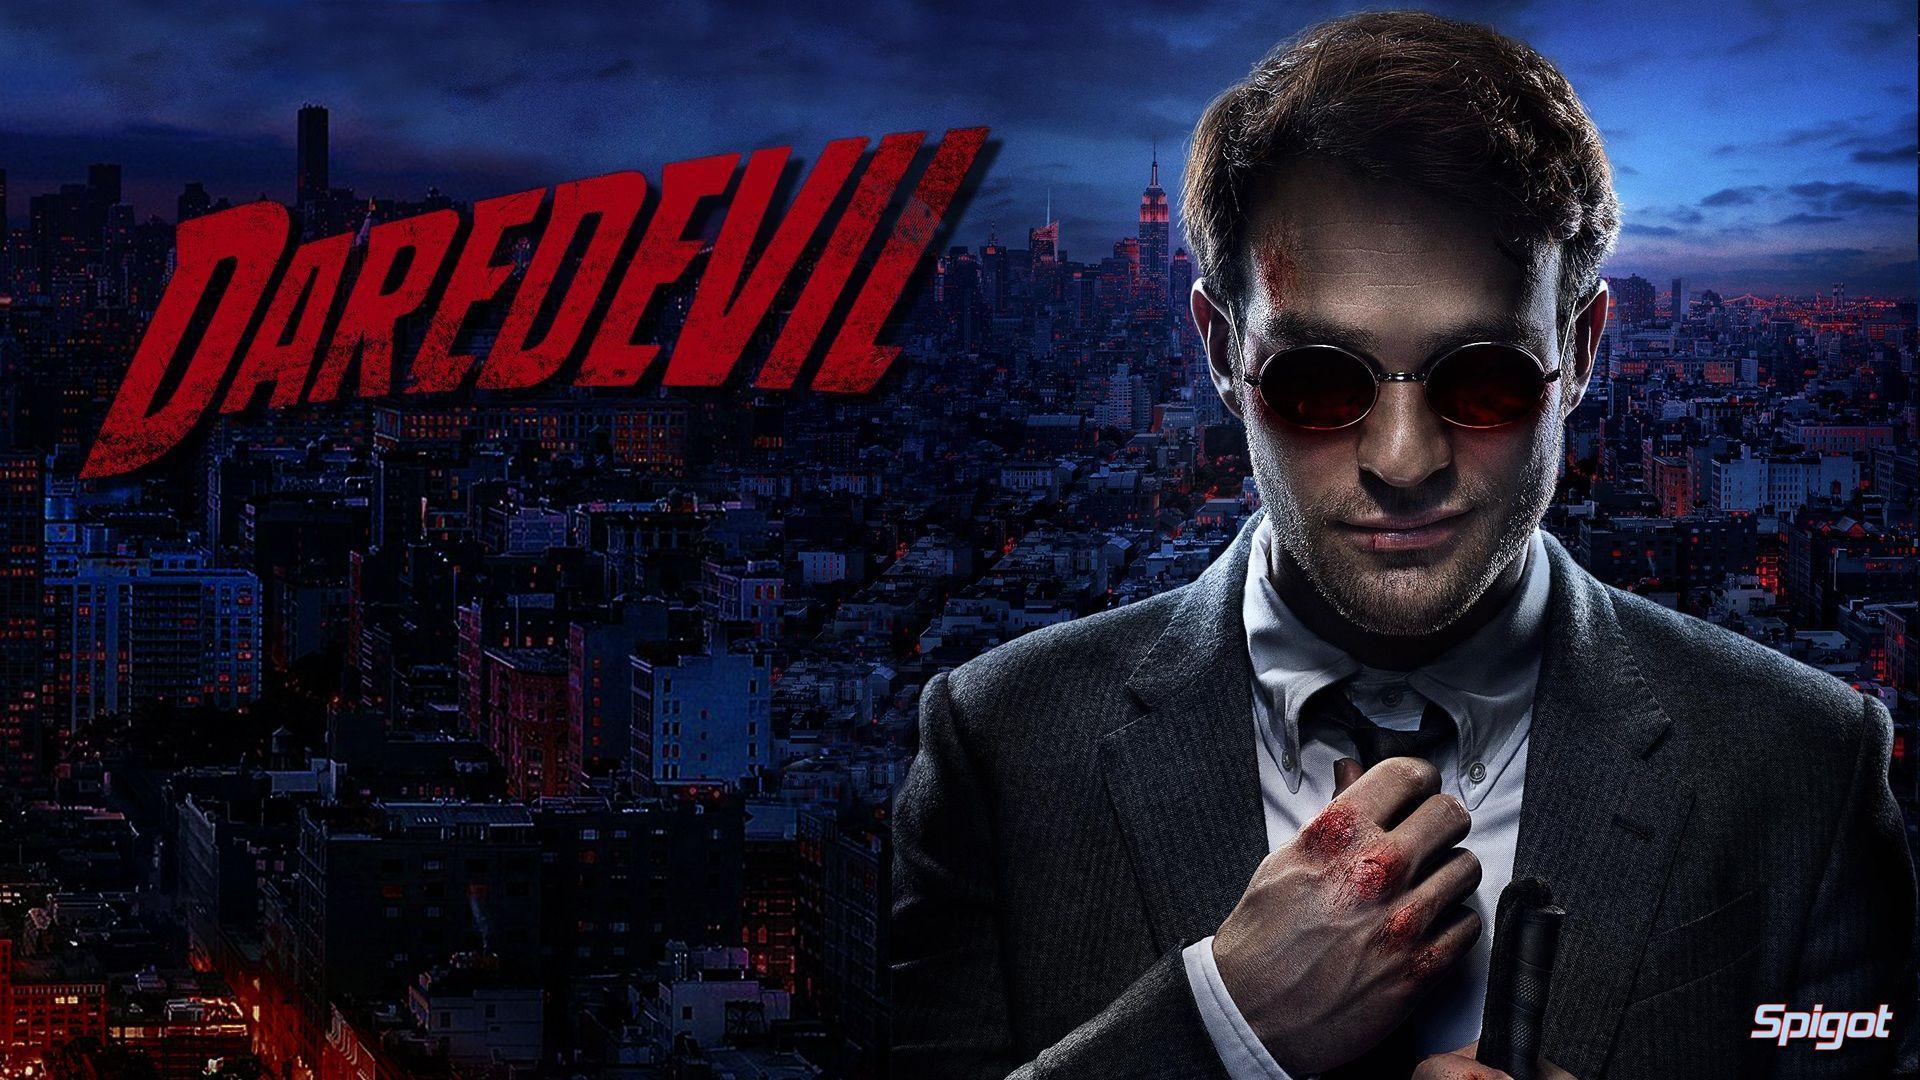 Daredevil Netflix Wallpaper. HD Wallpaper News